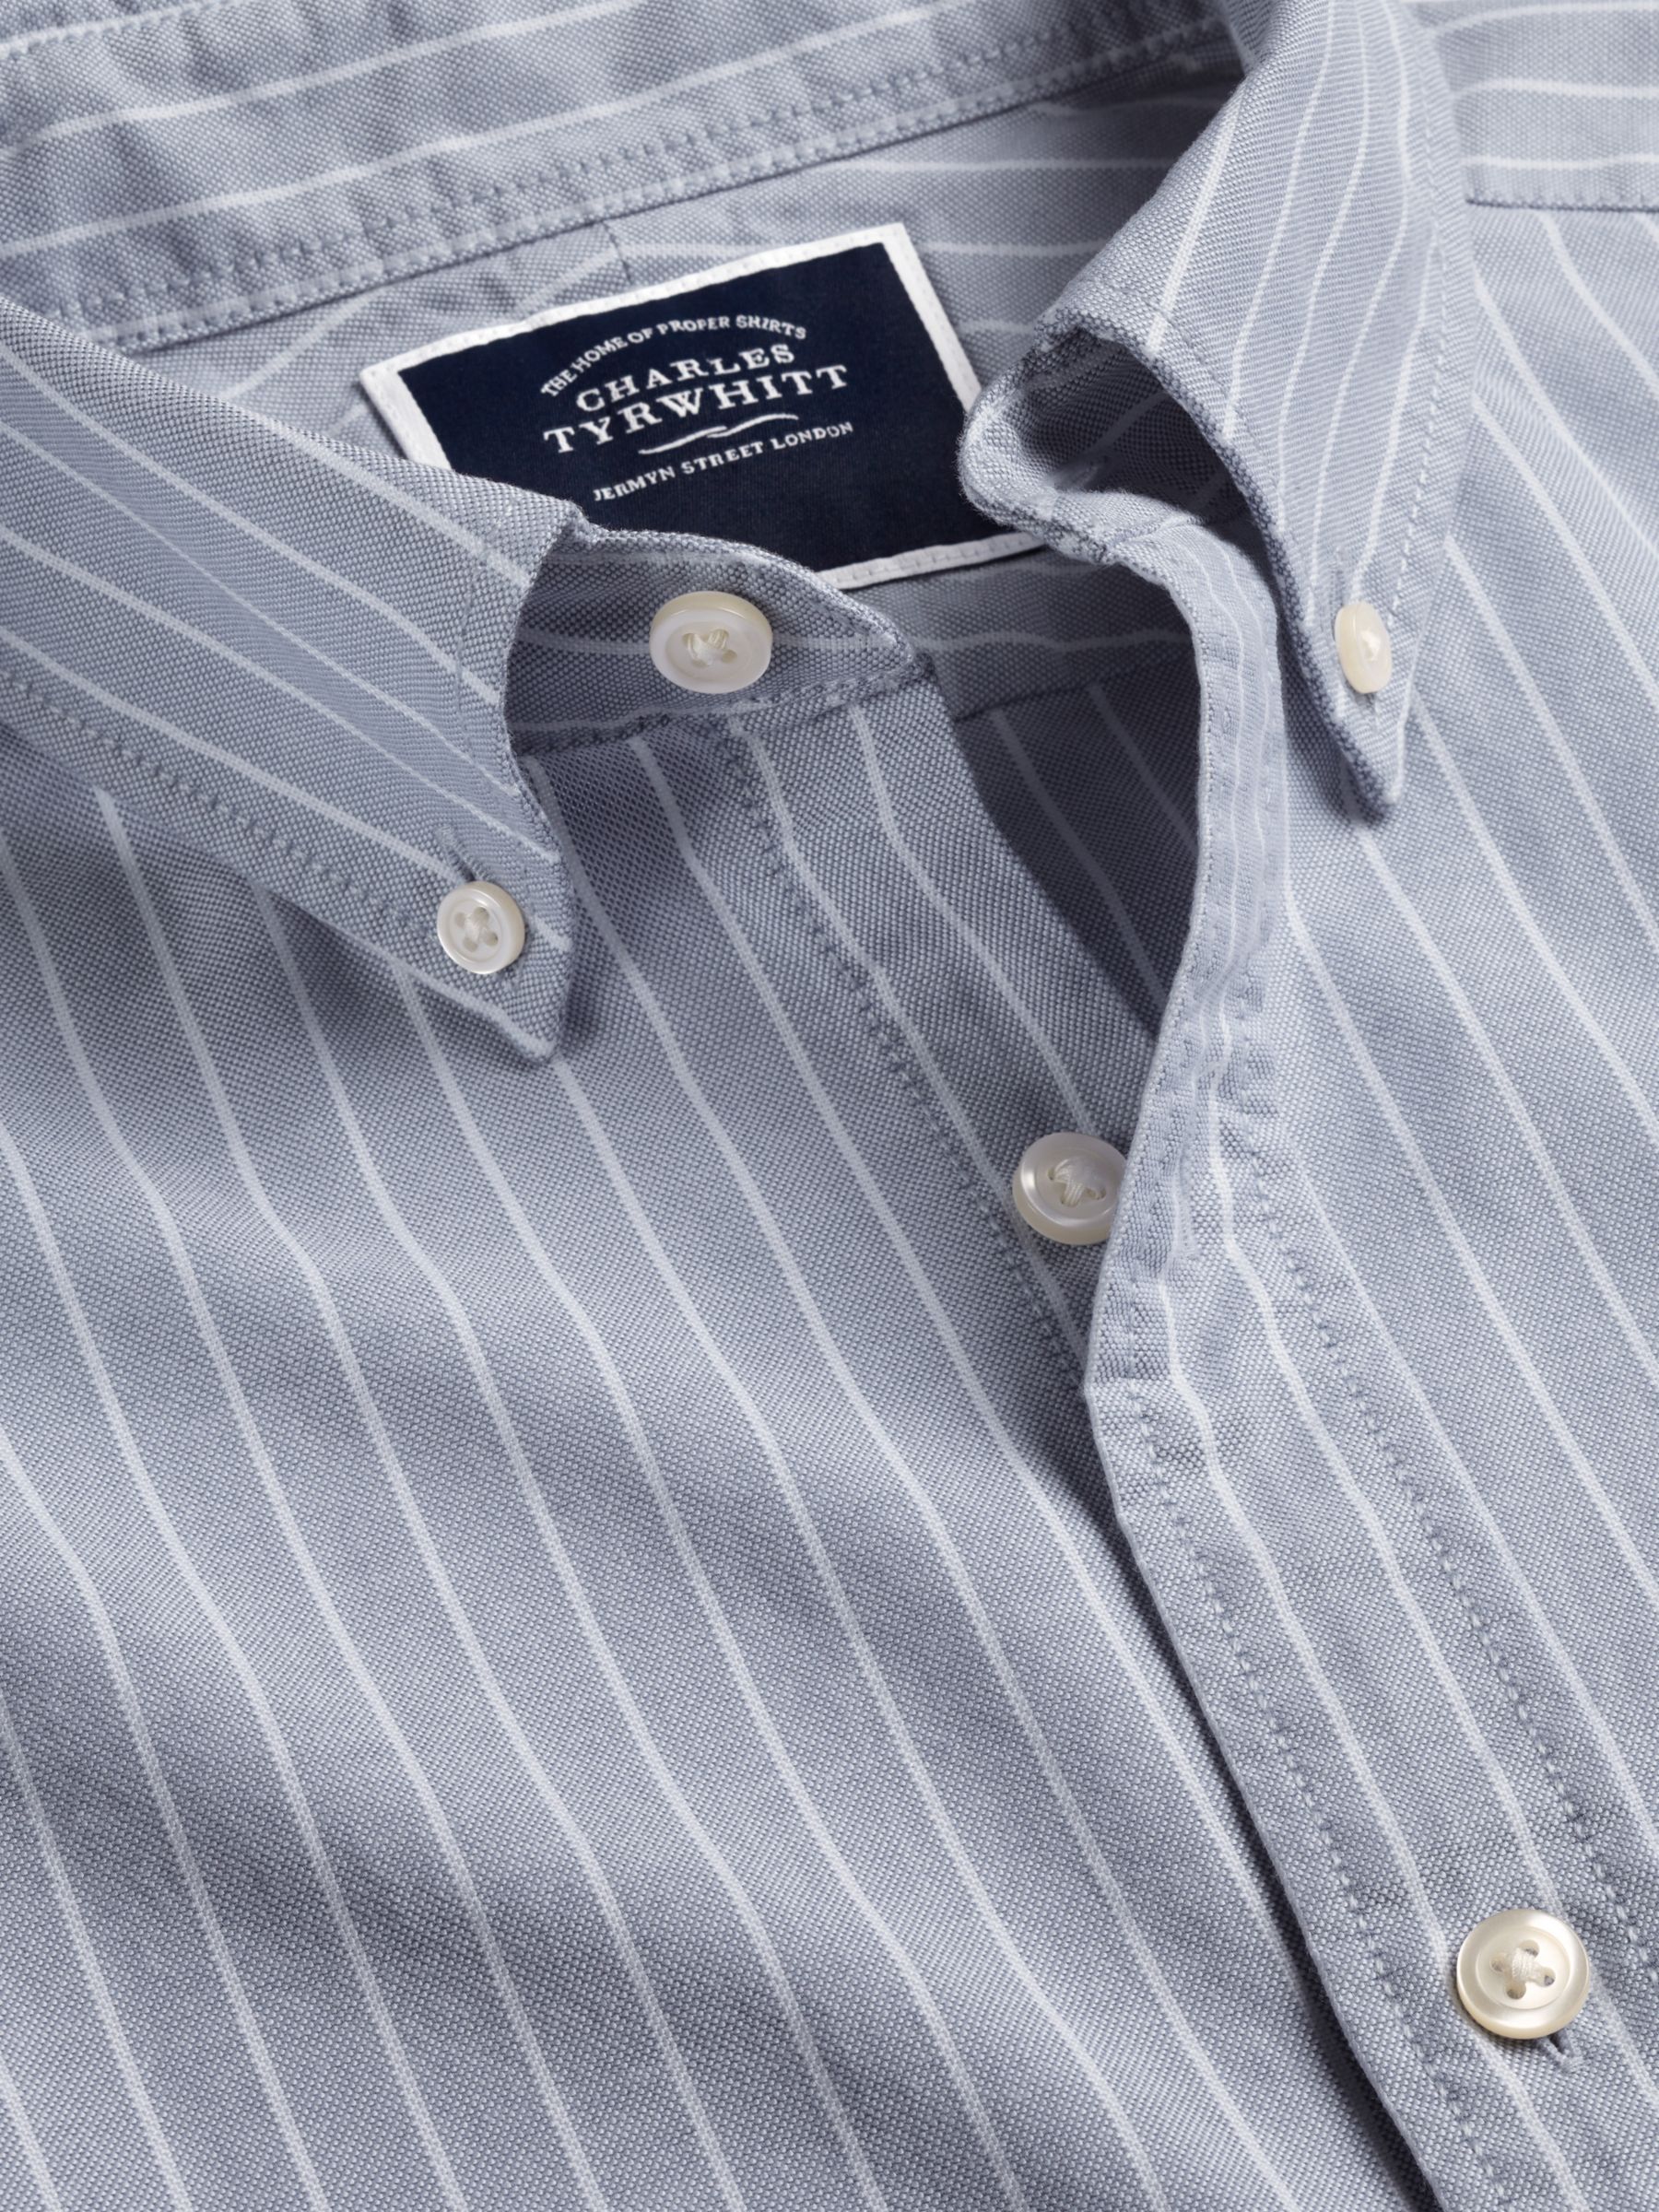 Charles Tyrwhitt Non-Iron Twill Cutaway Slim Fit Shirt, Steel Blue at ...